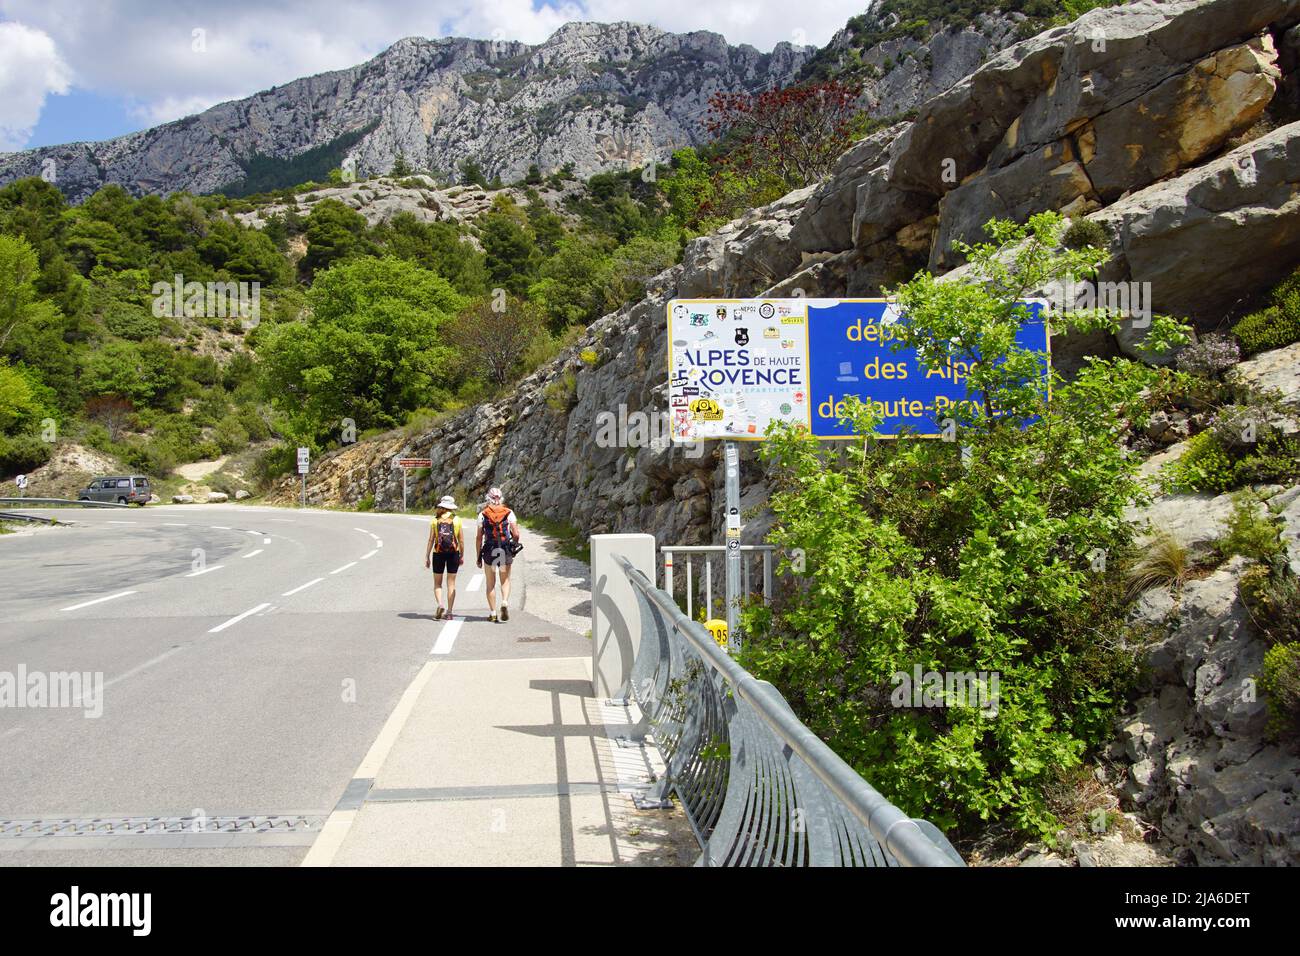 Lake of Sainte-Croix, France - April 28, 2022: Unknown and unrecognizable people walking by France Alpes-de-Haute-Provence department entrance sign. Stock Photo